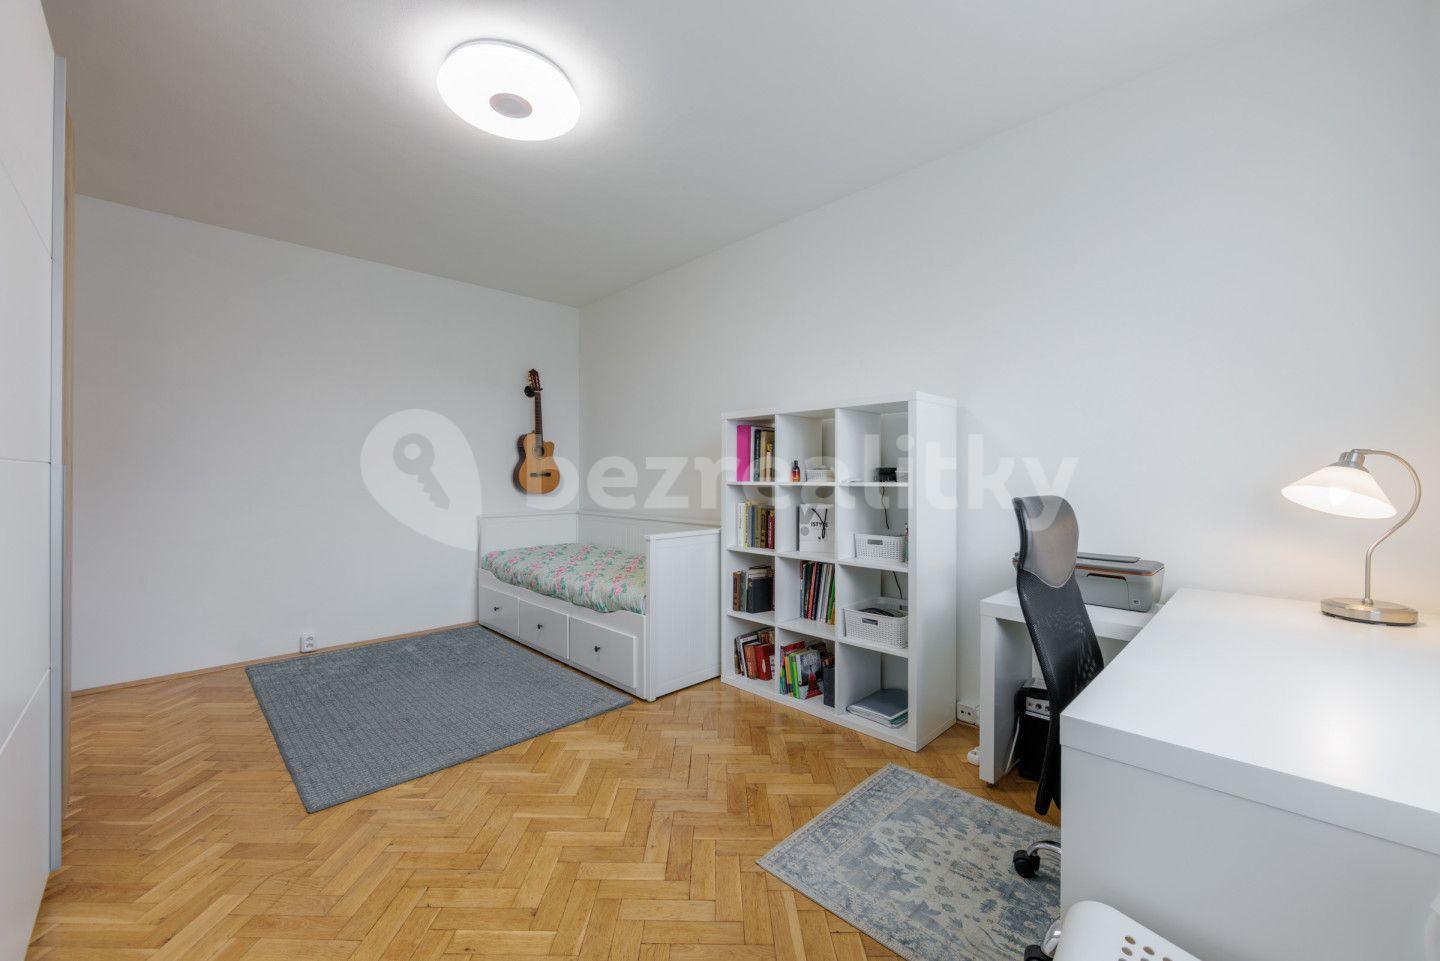 2 bedroom flat for sale, 56 m², Maďarská, Karlovy Vary, Karlovarský Region